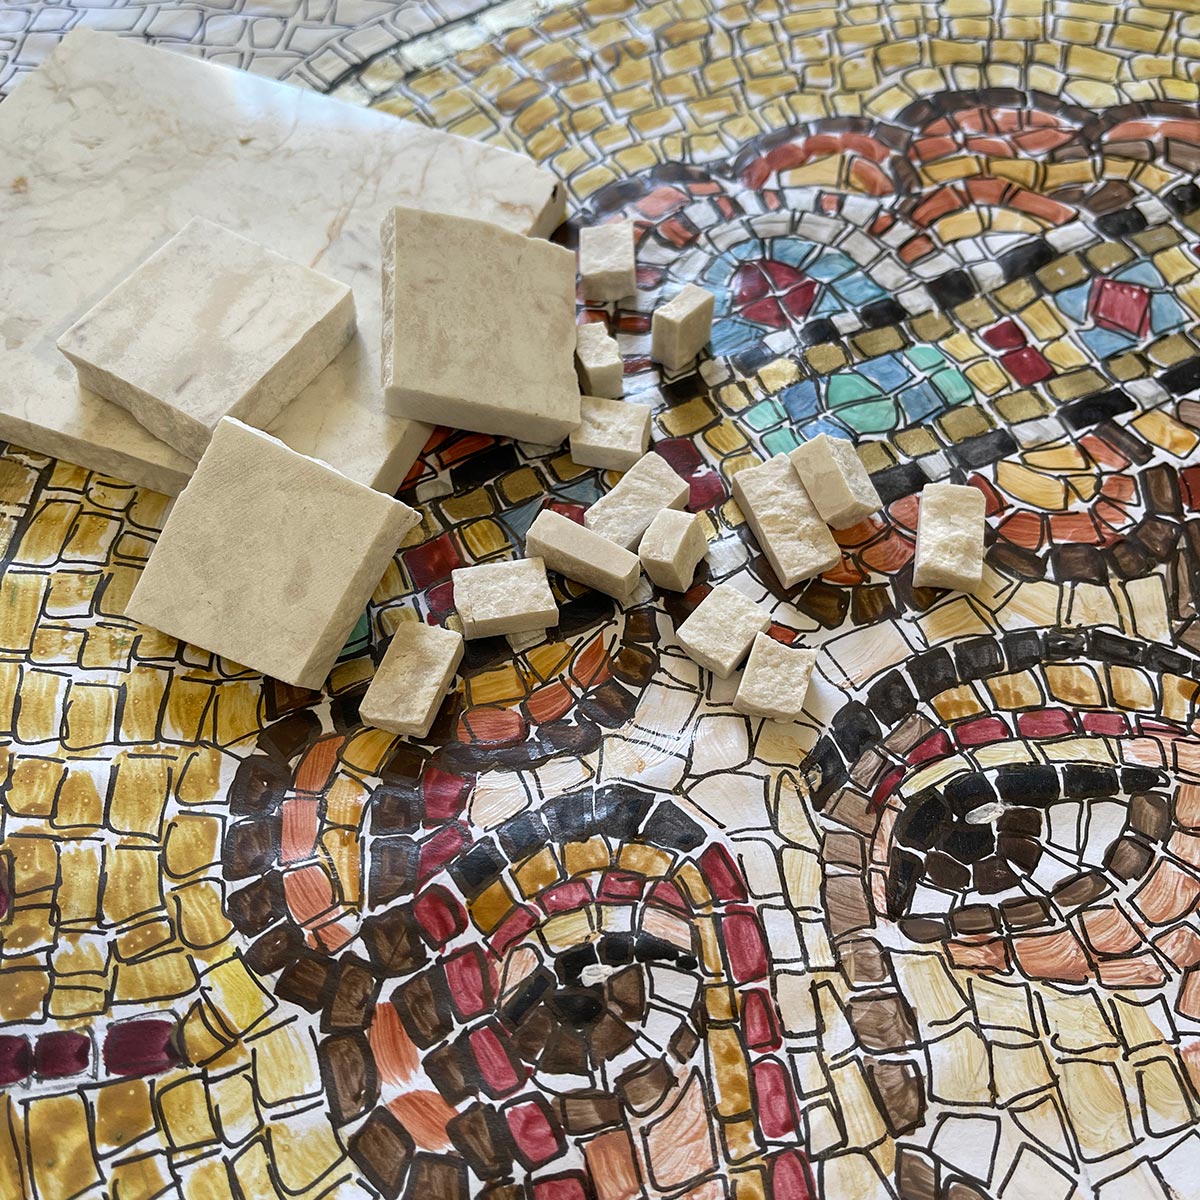 Parthenope mosaic kit (indirect technique)